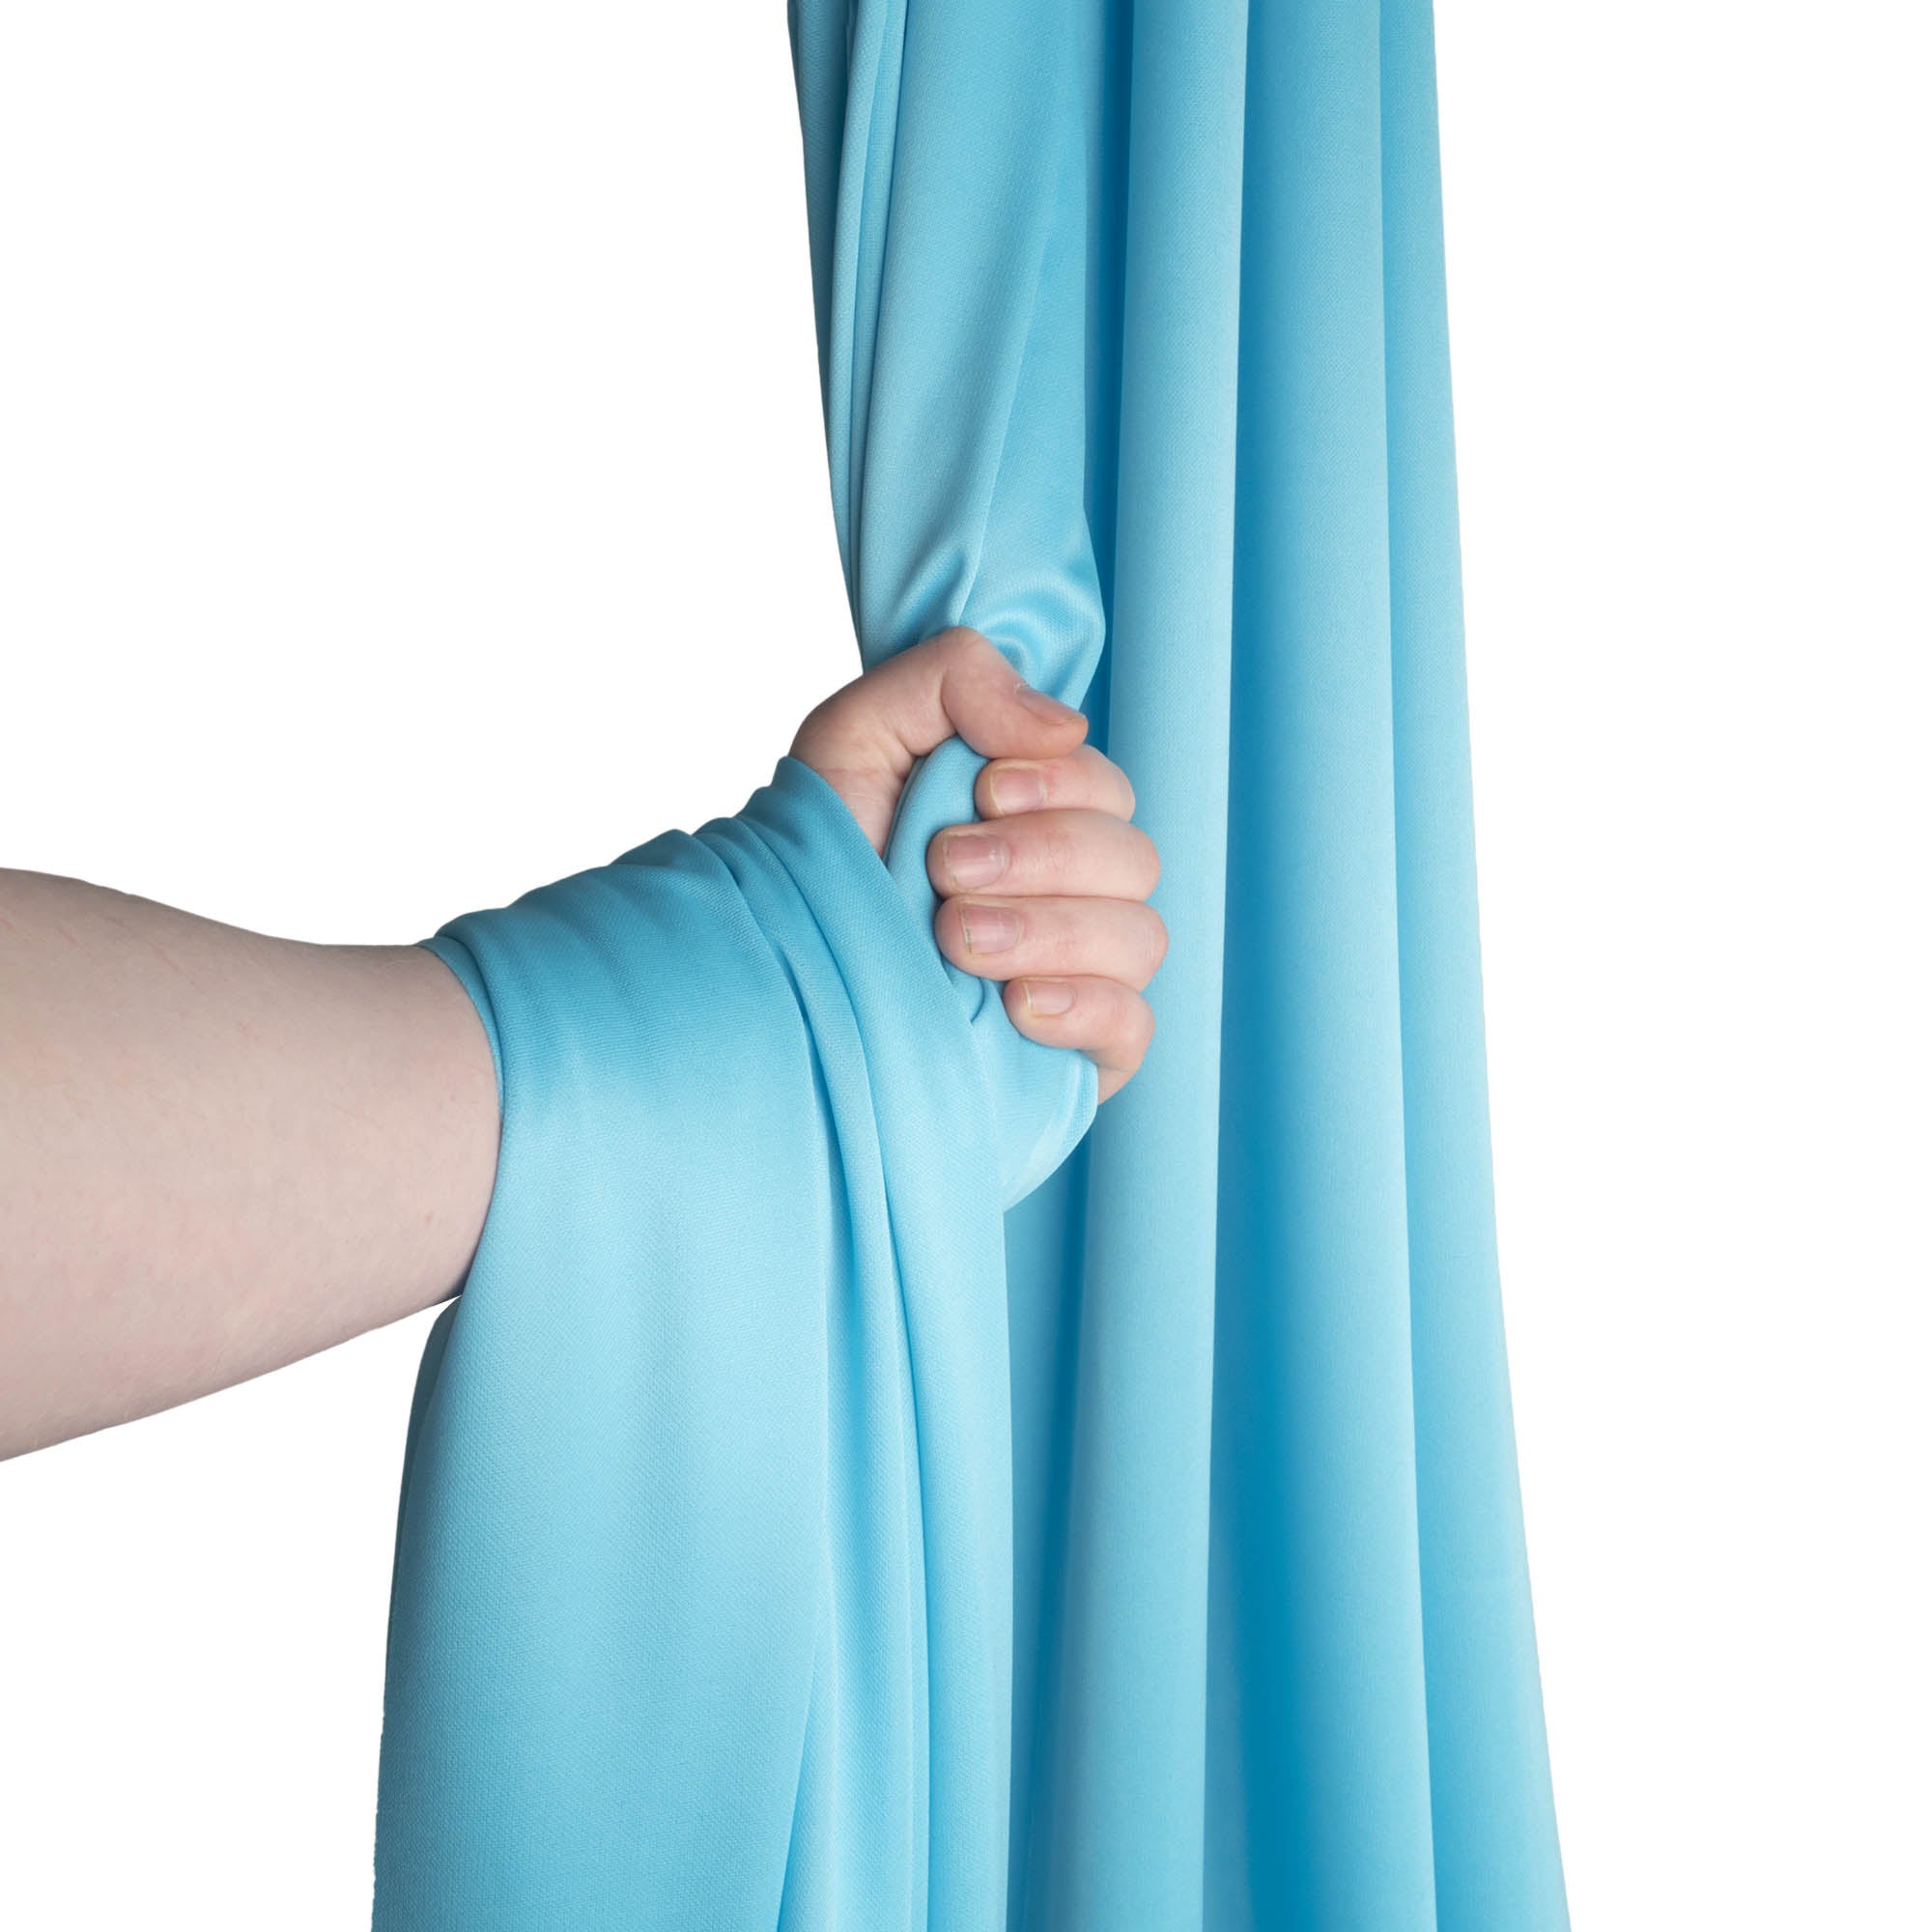 Celeste silk wrapped around hand